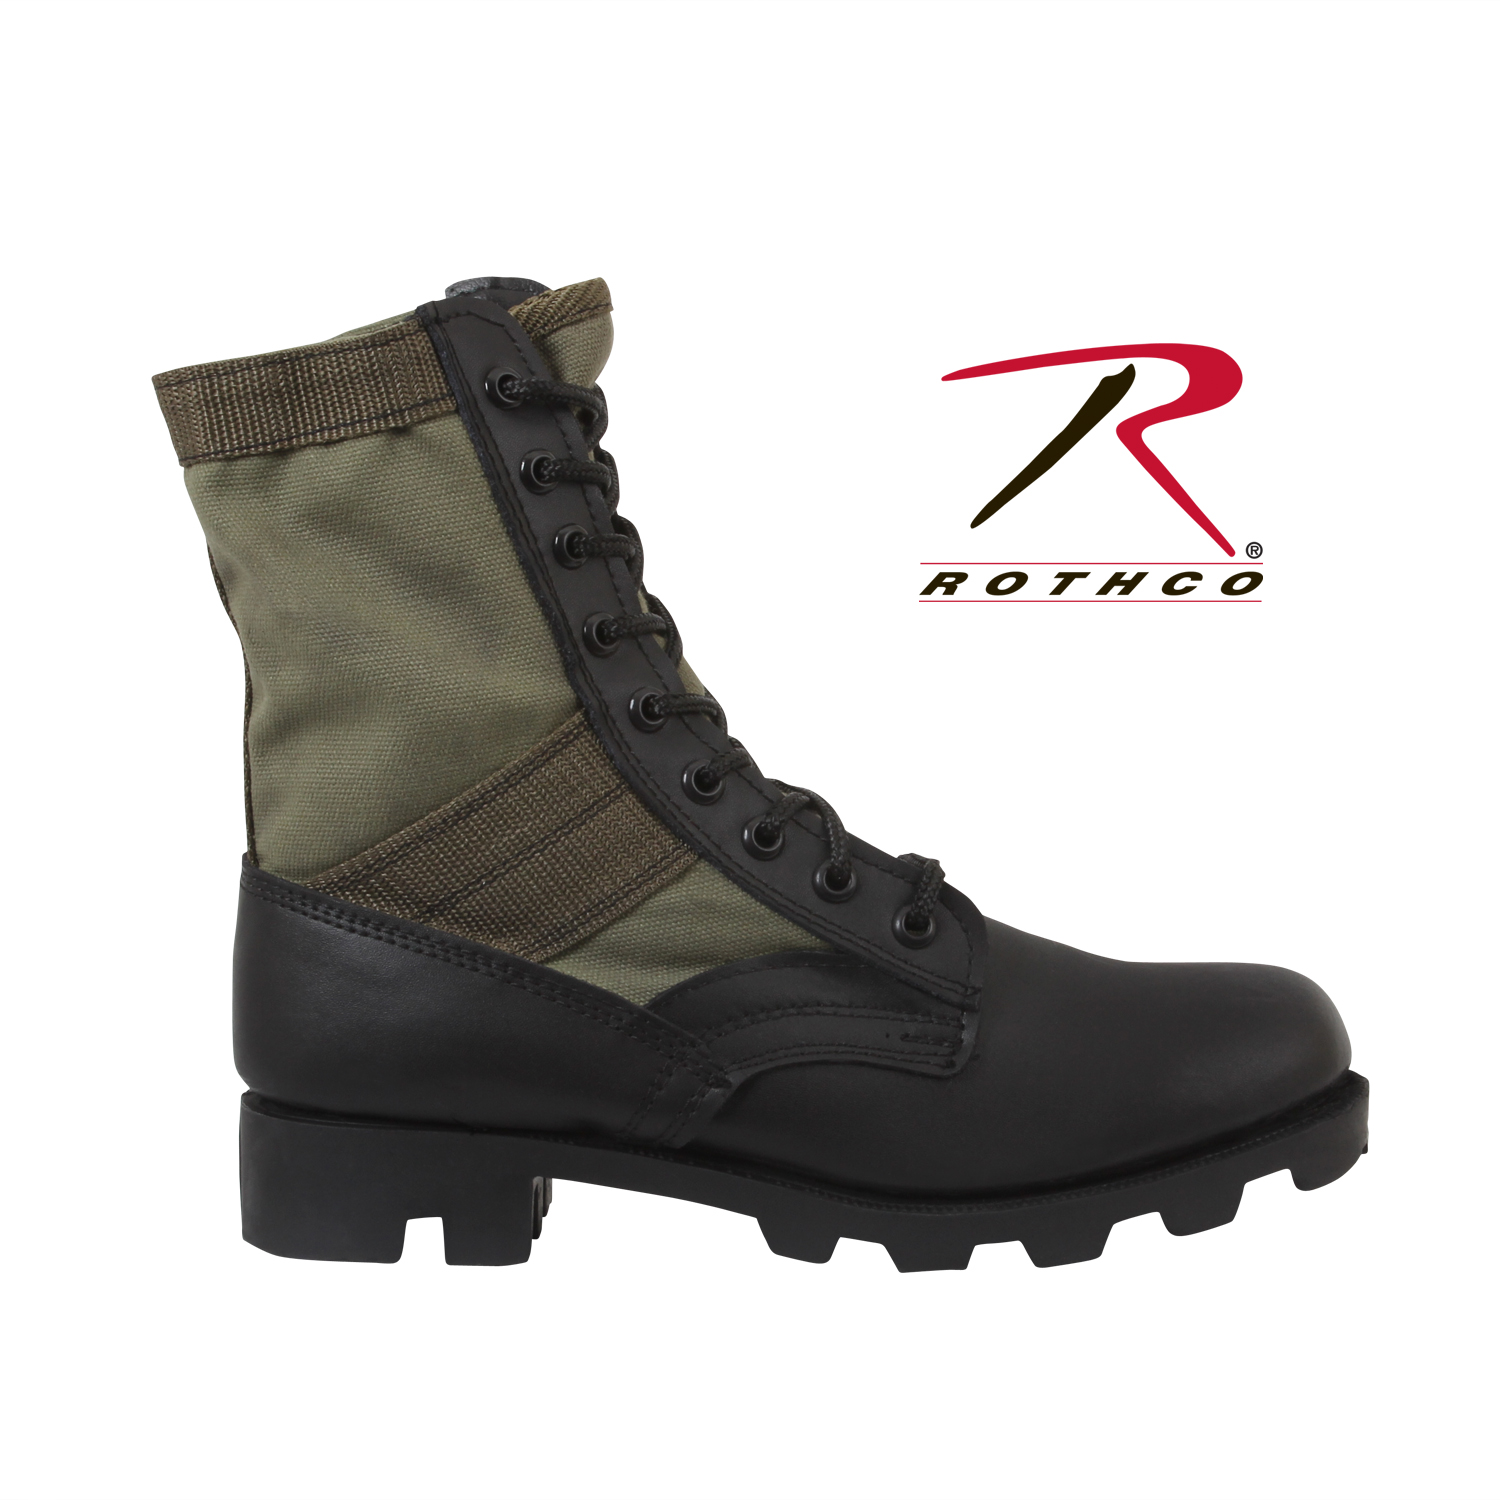 Rothco 5080 G.I. Style Jungle Military 